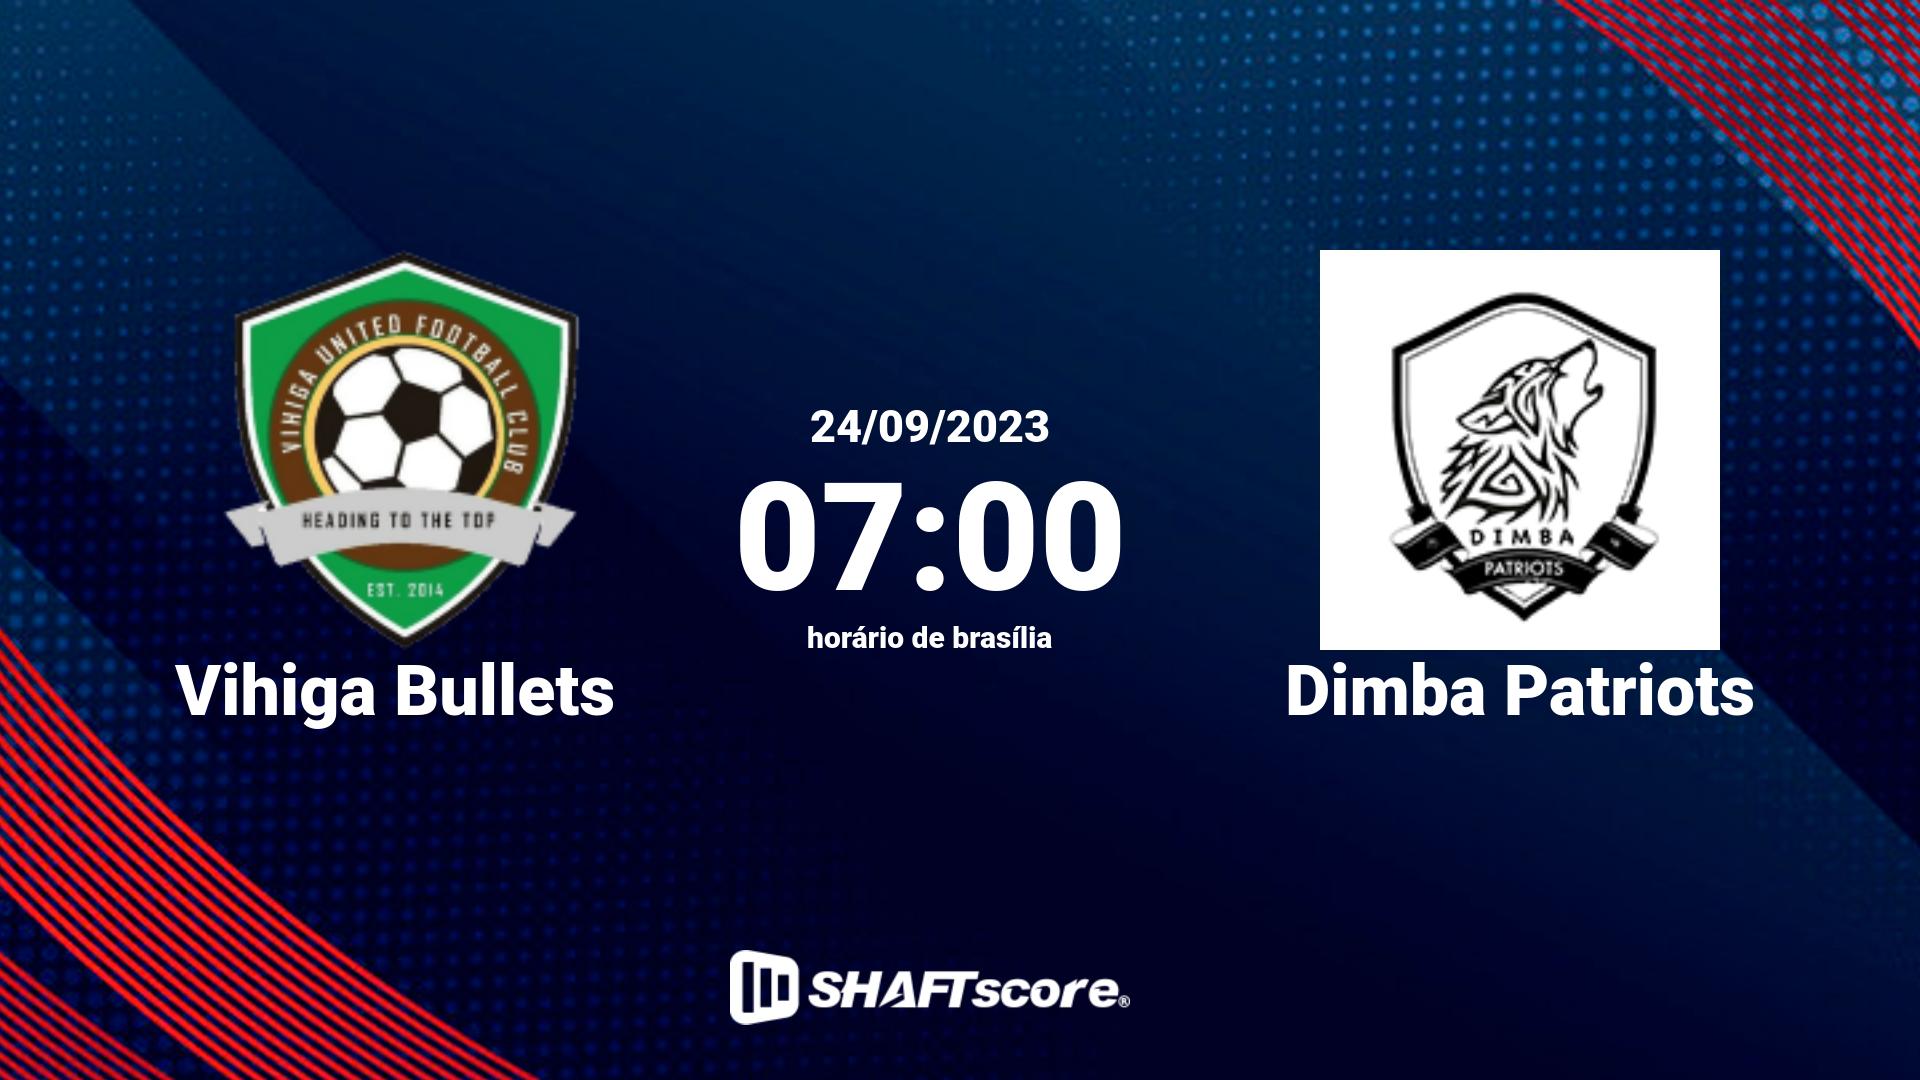 Estatísticas do jogo Vihiga Bullets vs Dimba Patriots 24.09 07:00